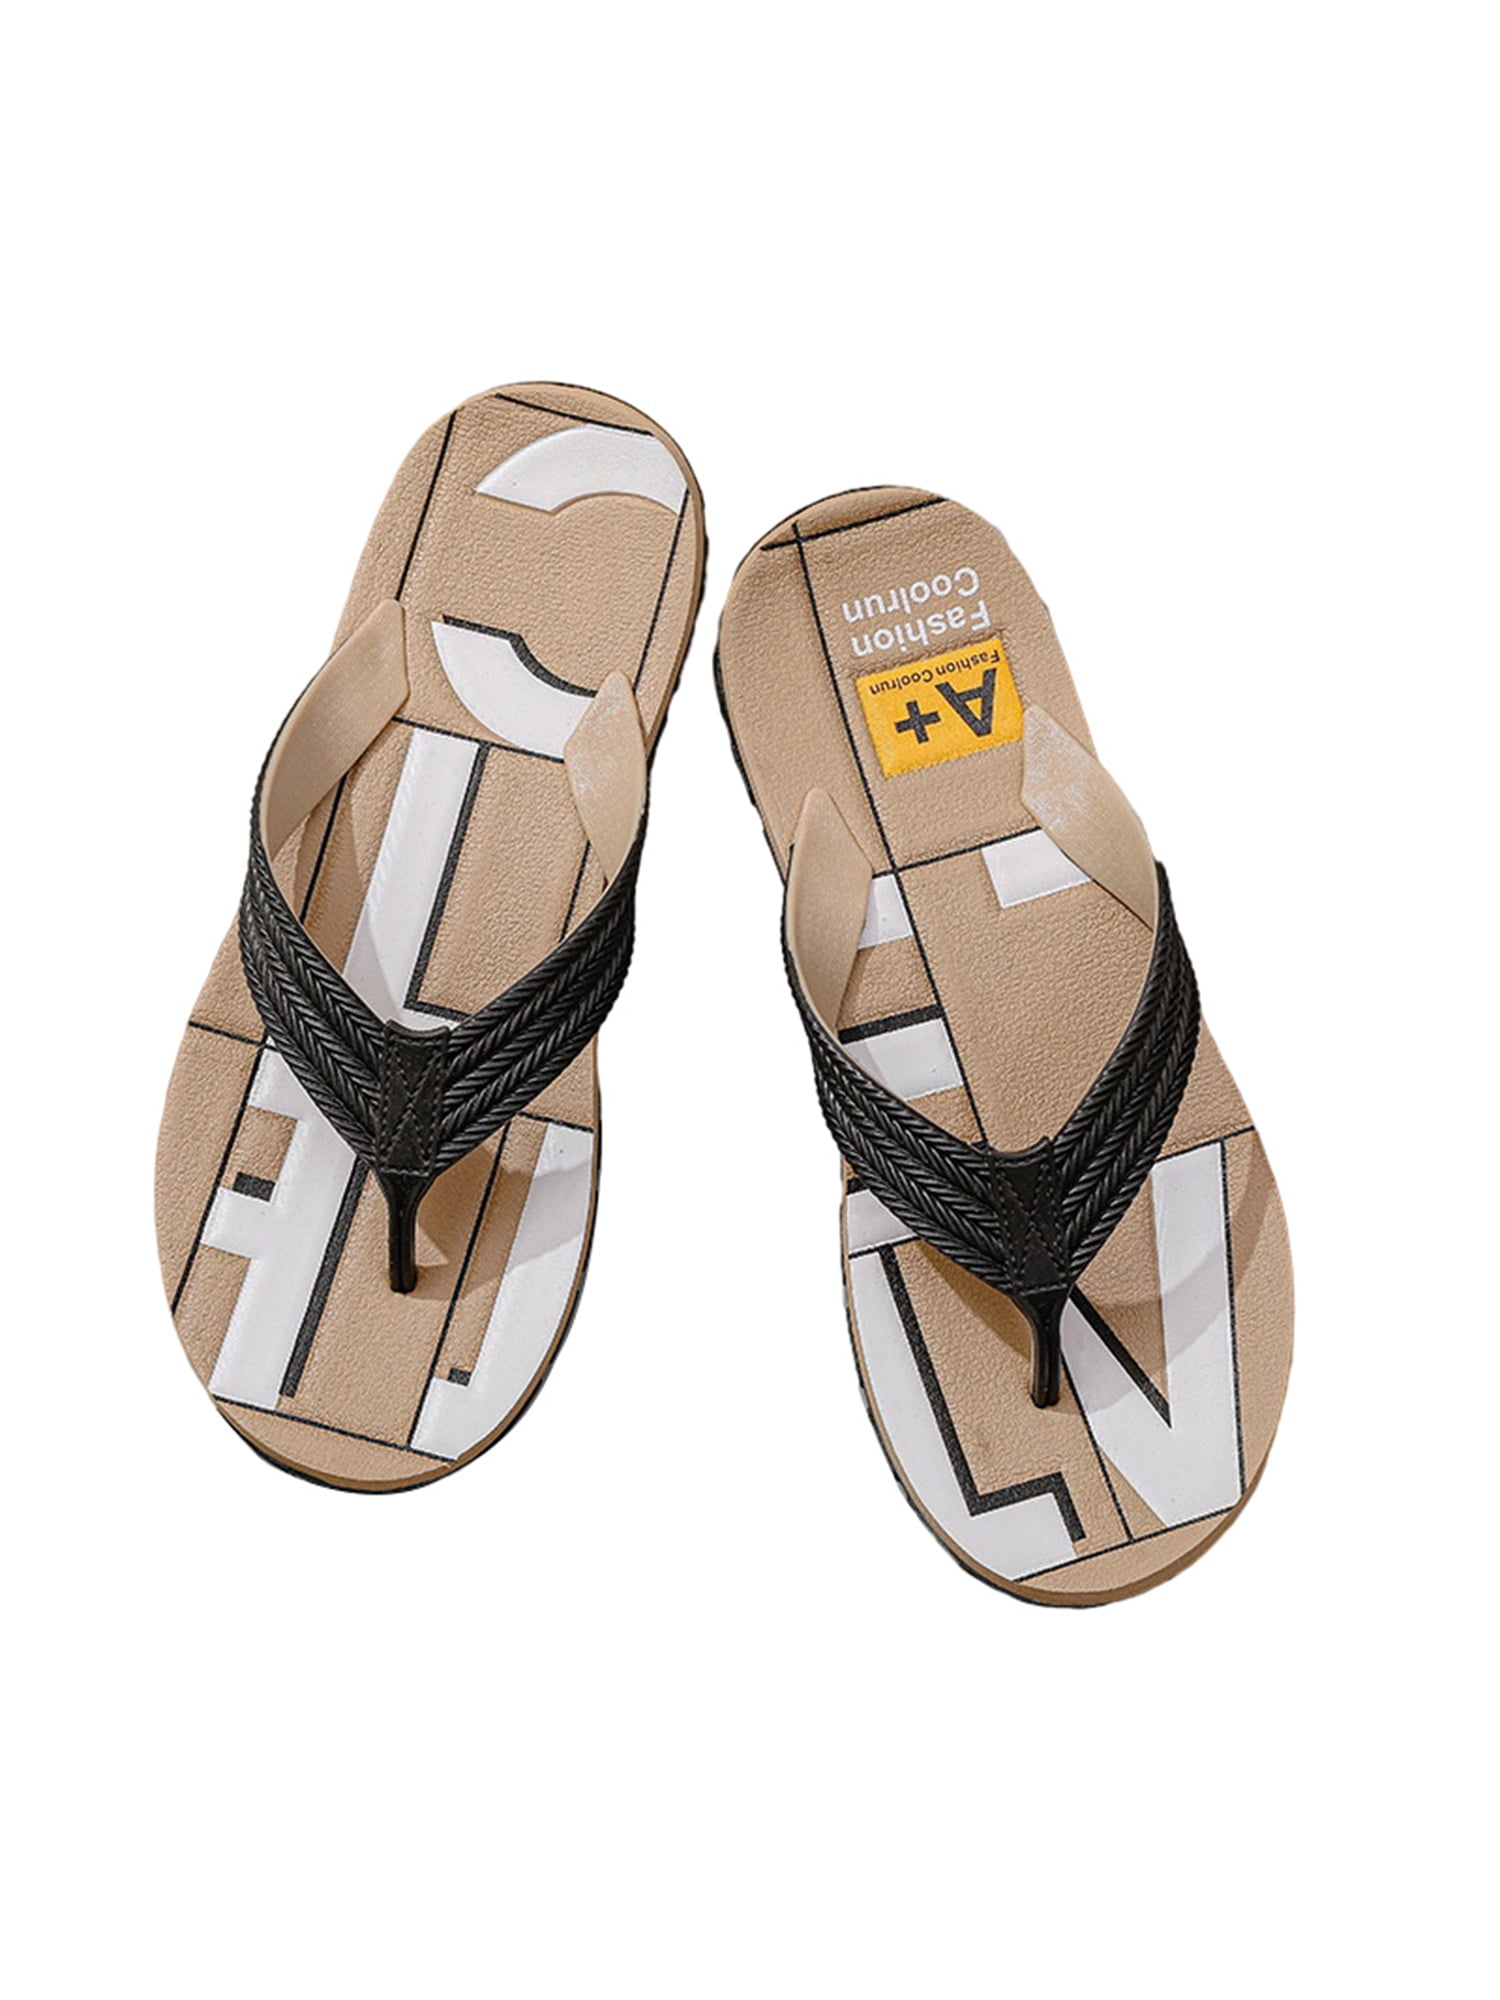 New Men Beach Sliders Casual Shoes Summer Flip Flops Flat Sandals Slippers Shoes